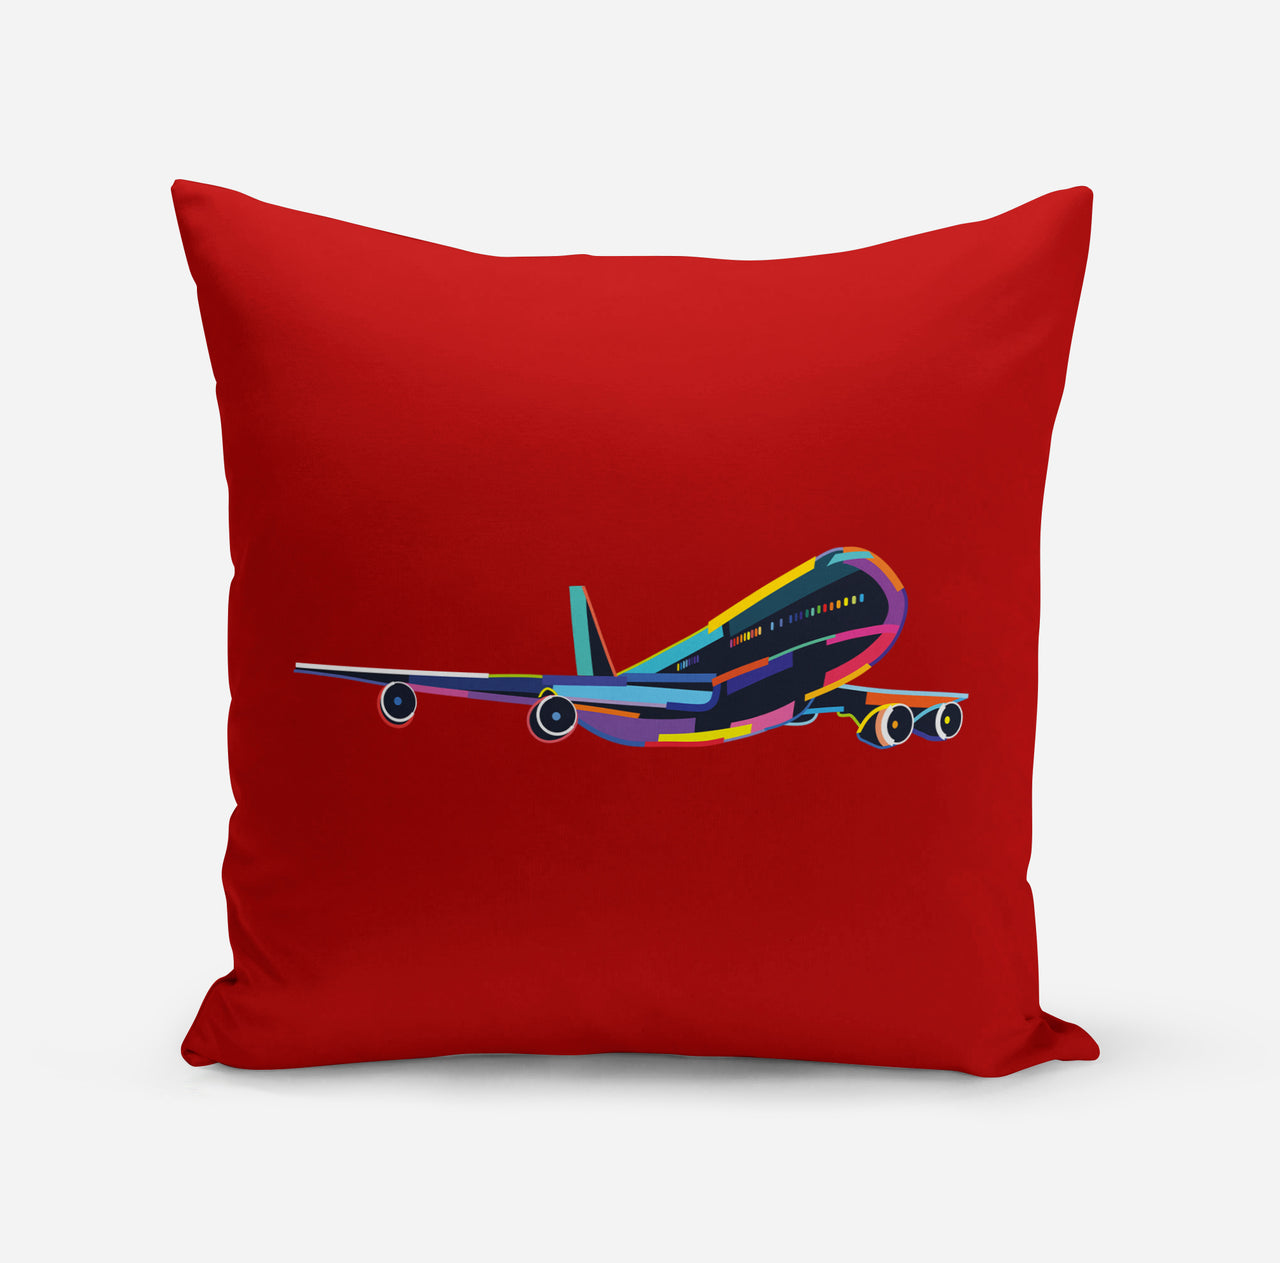 Multicolor Airplane Designed Pillows